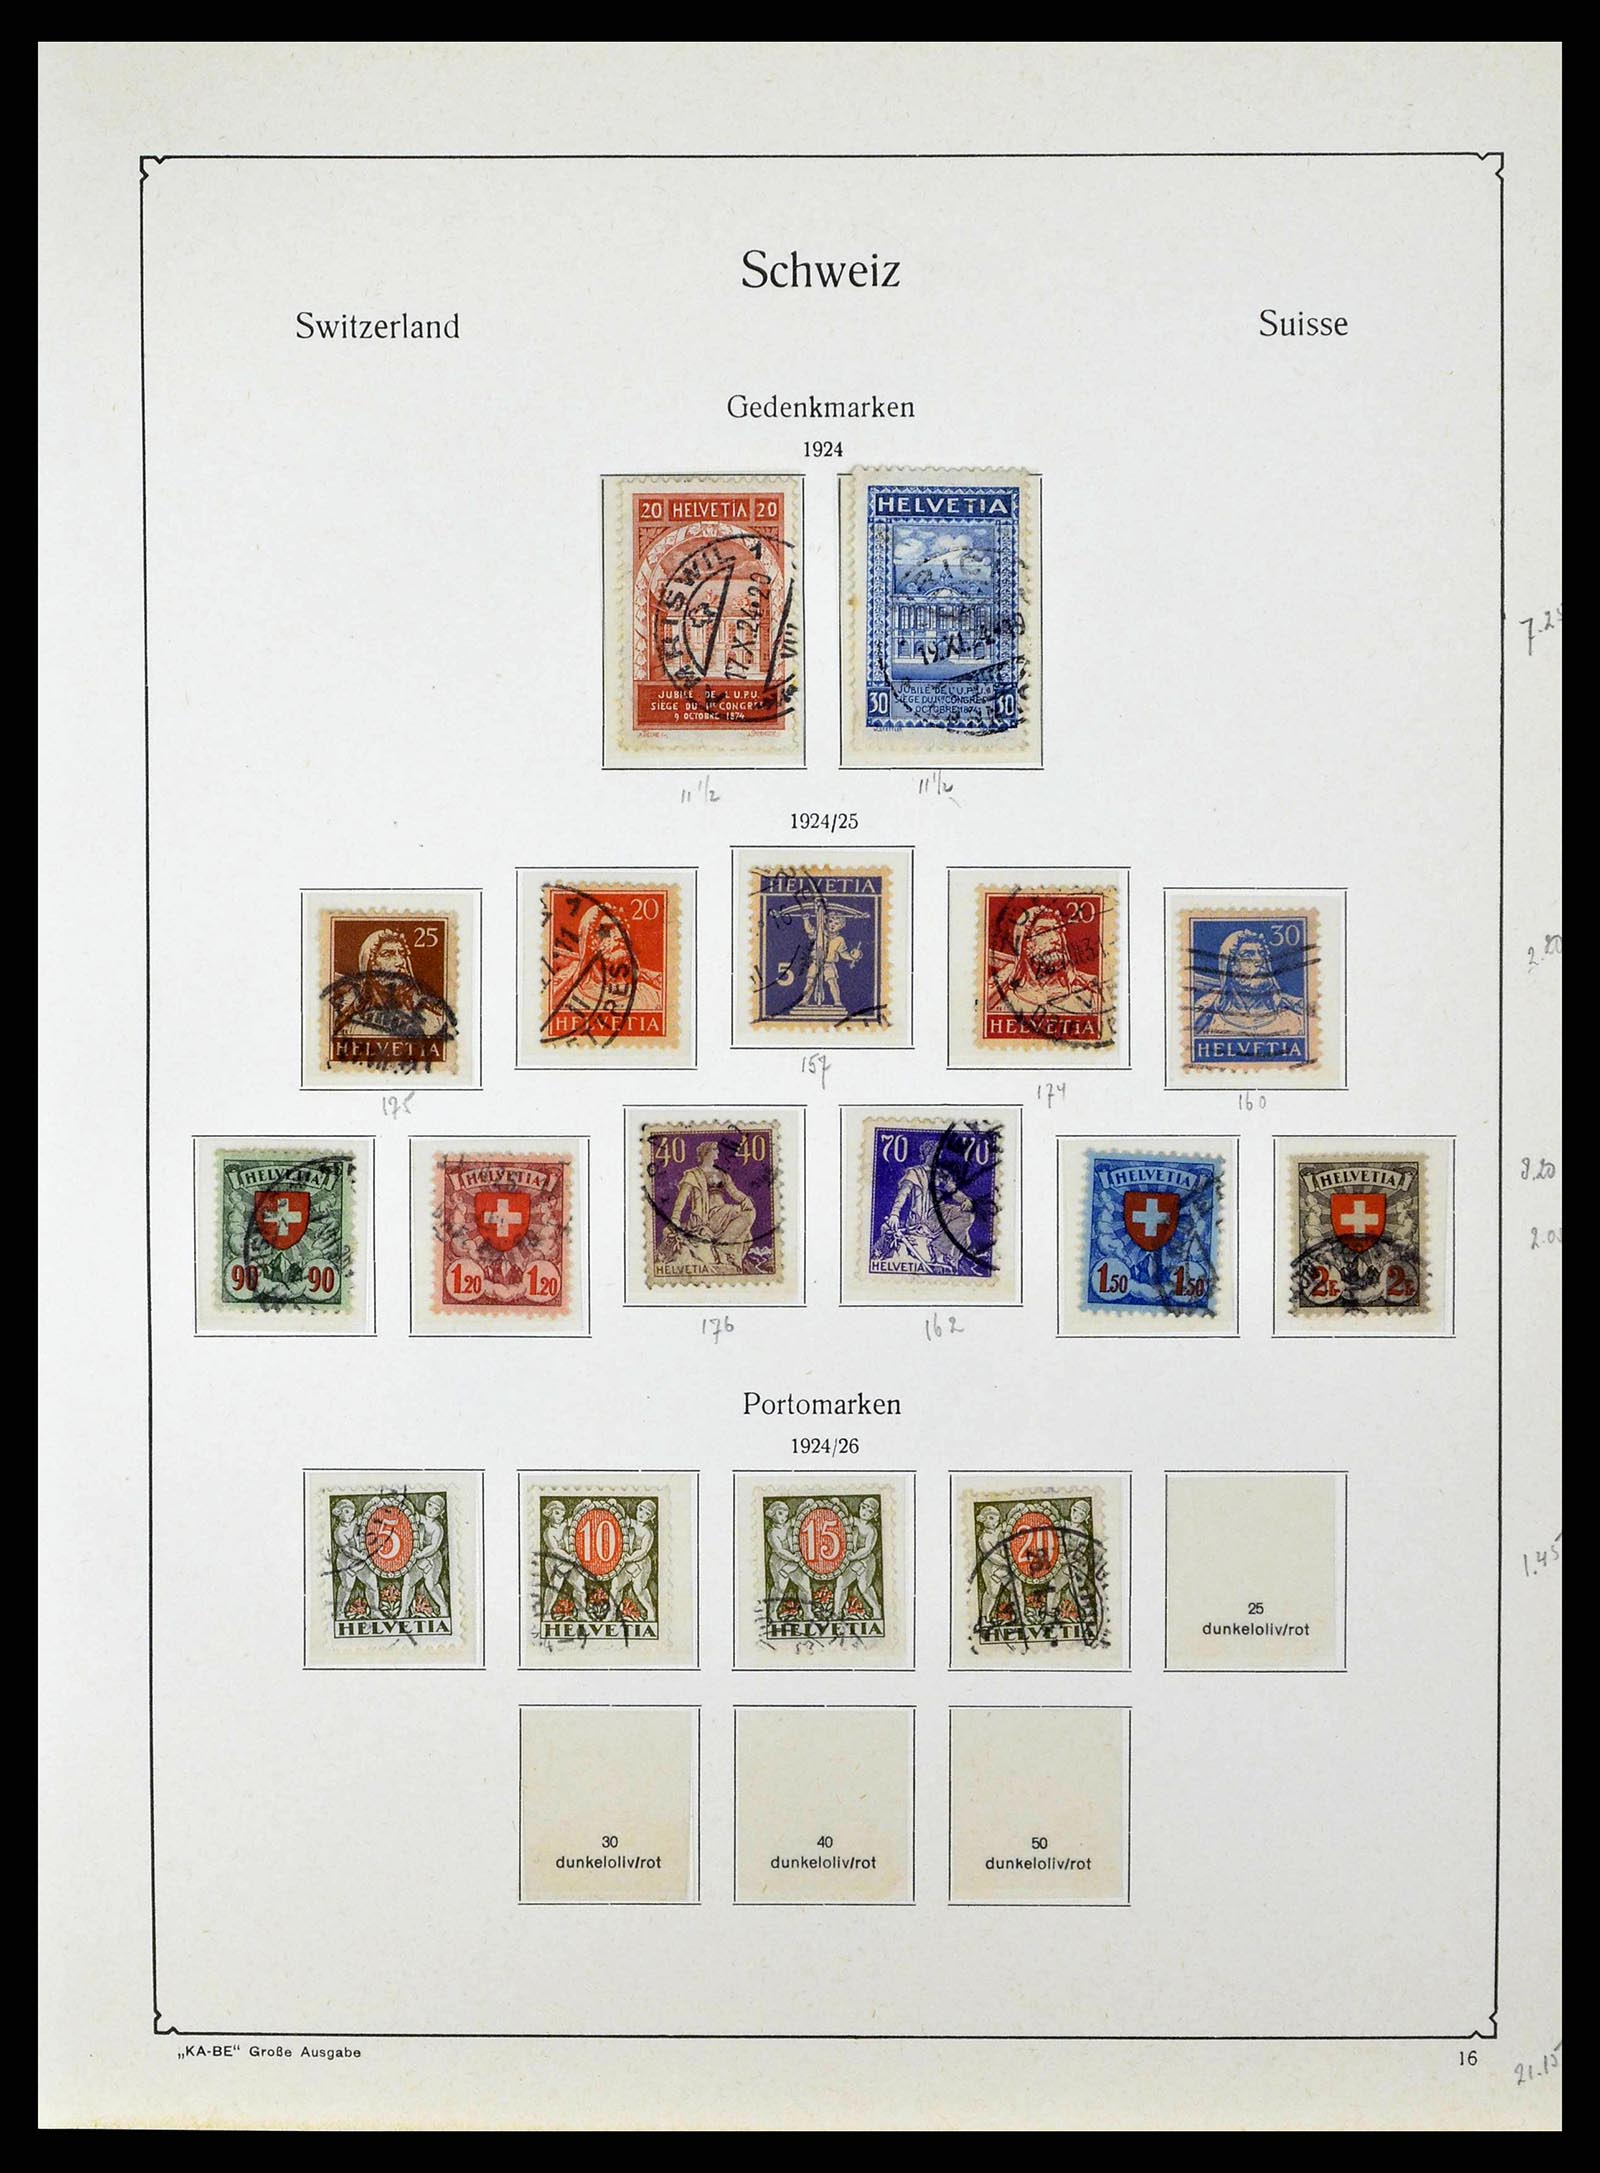 38706 0016 - Stamp collection 38706 Switzerland 1854-1985.